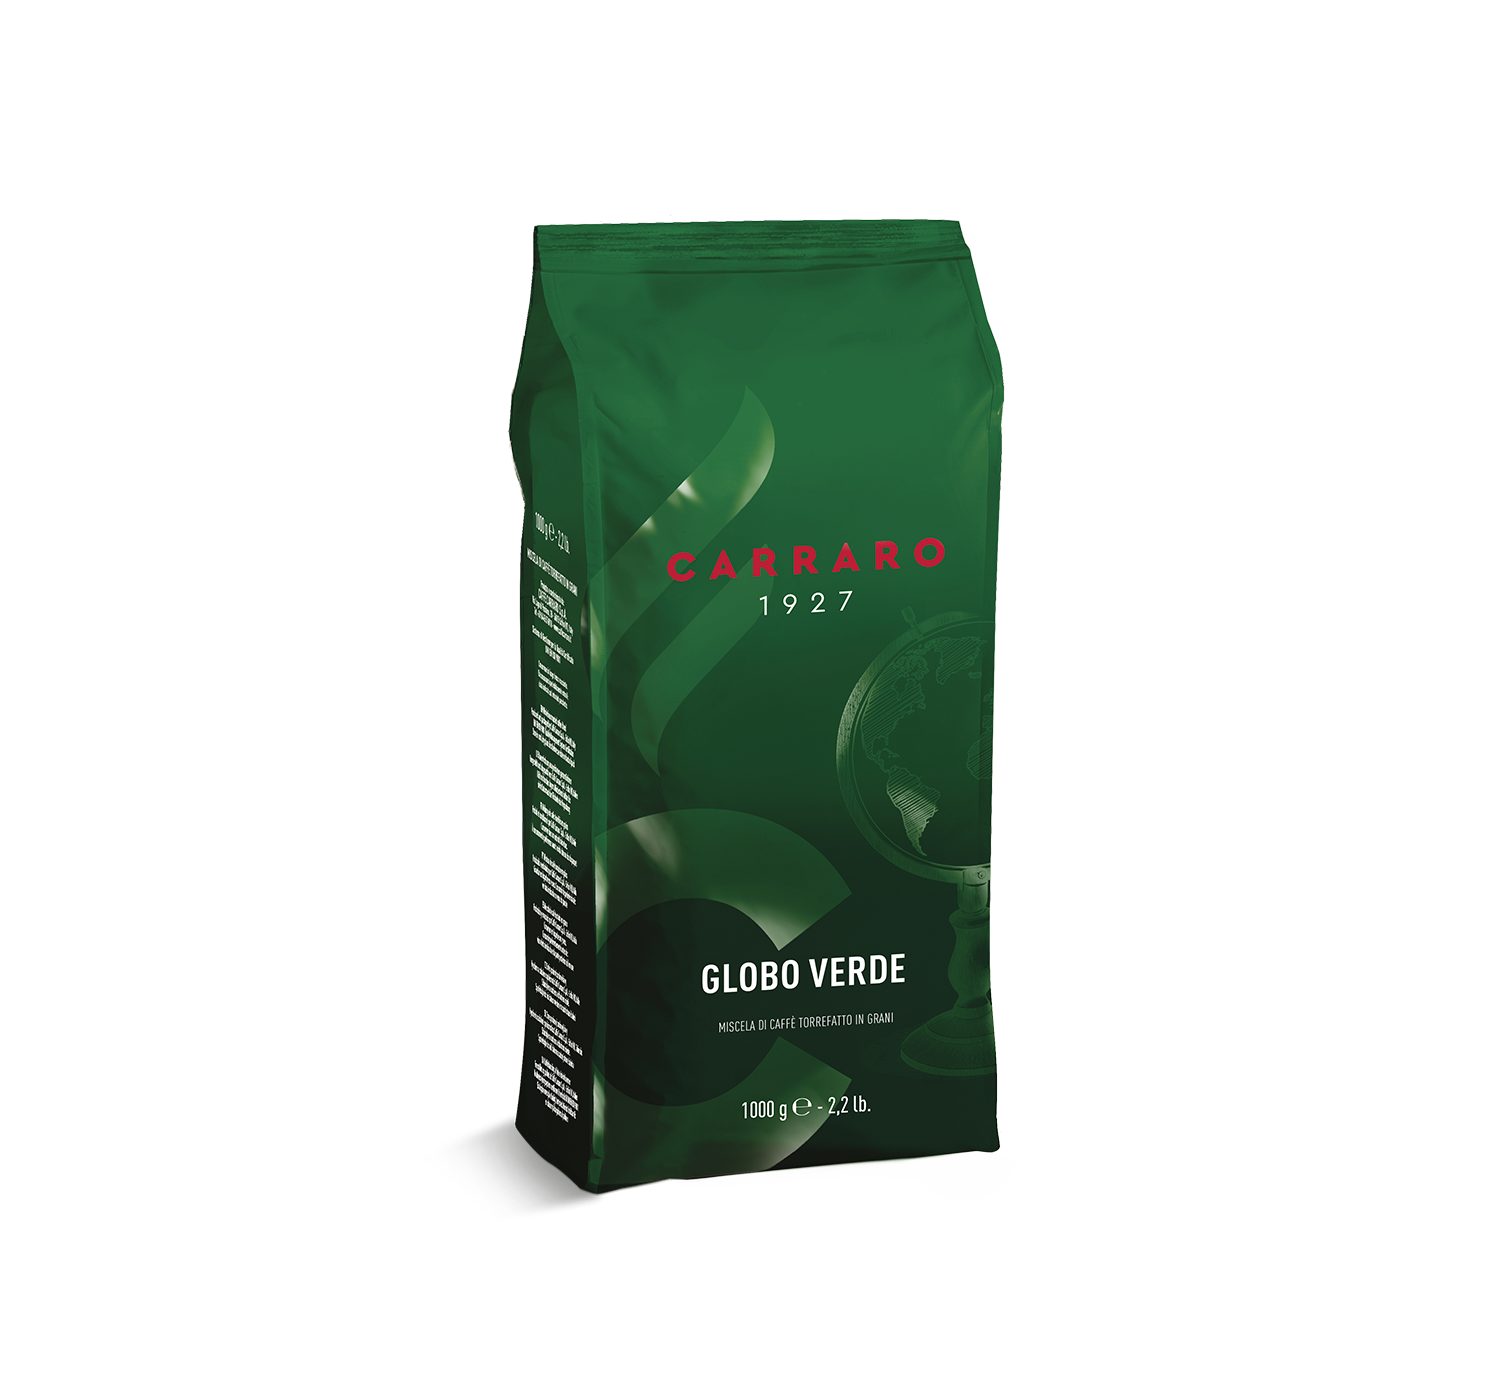 Globo line - Globo Verde – Coffee beans 1000 g - Shop online Caffè Carraro